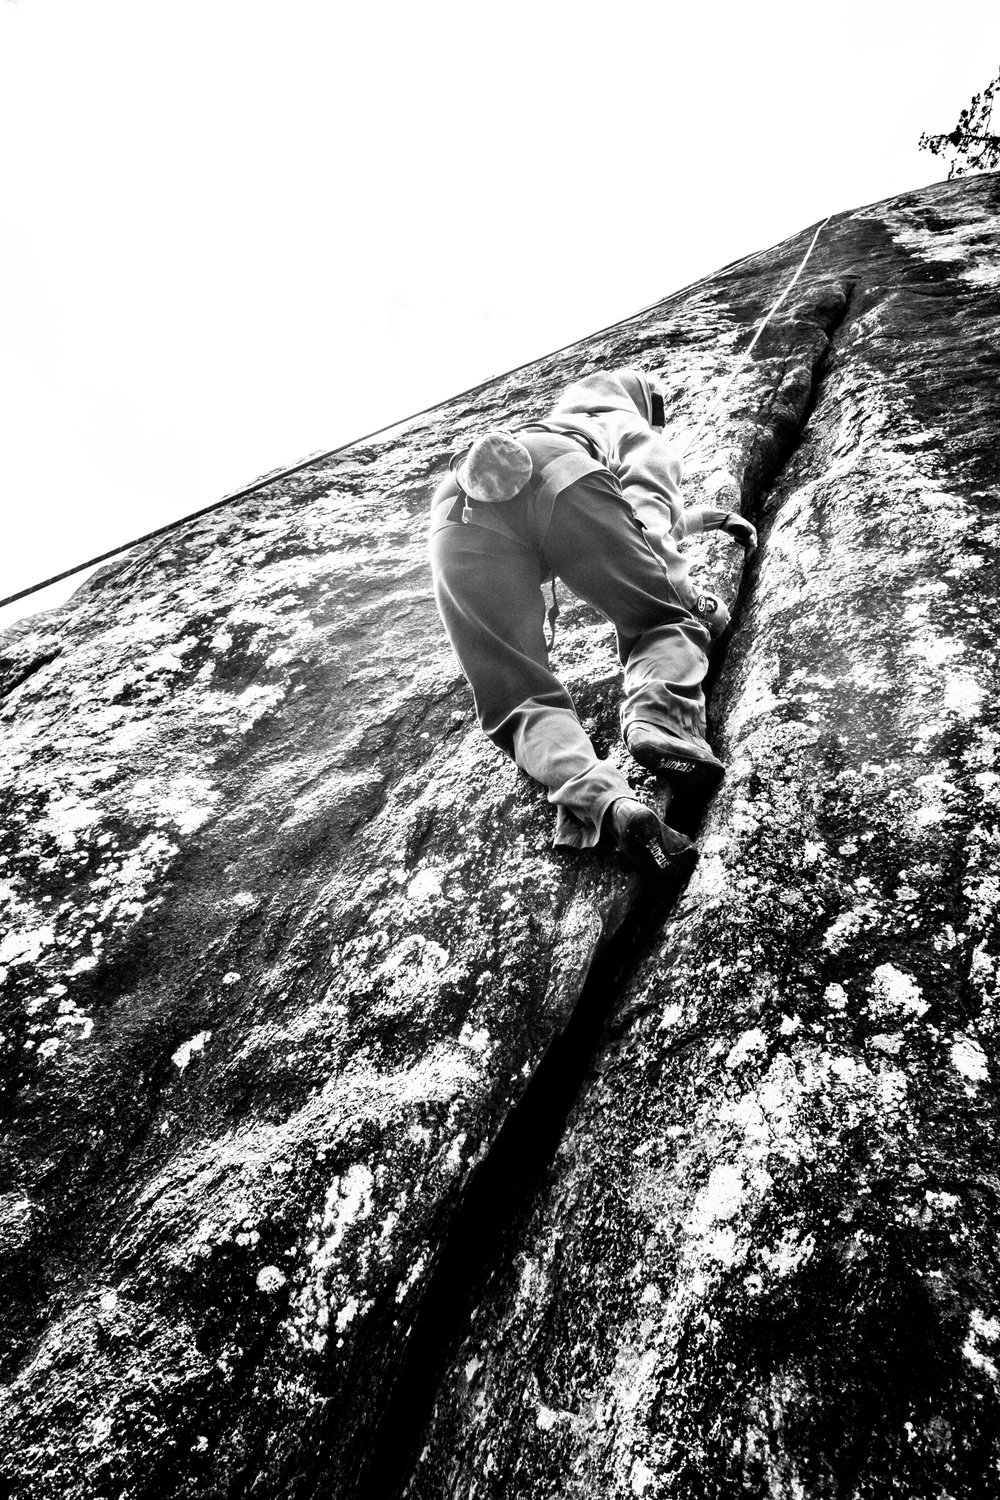 4-22-17 Rock Climbing black & white-10.jpg